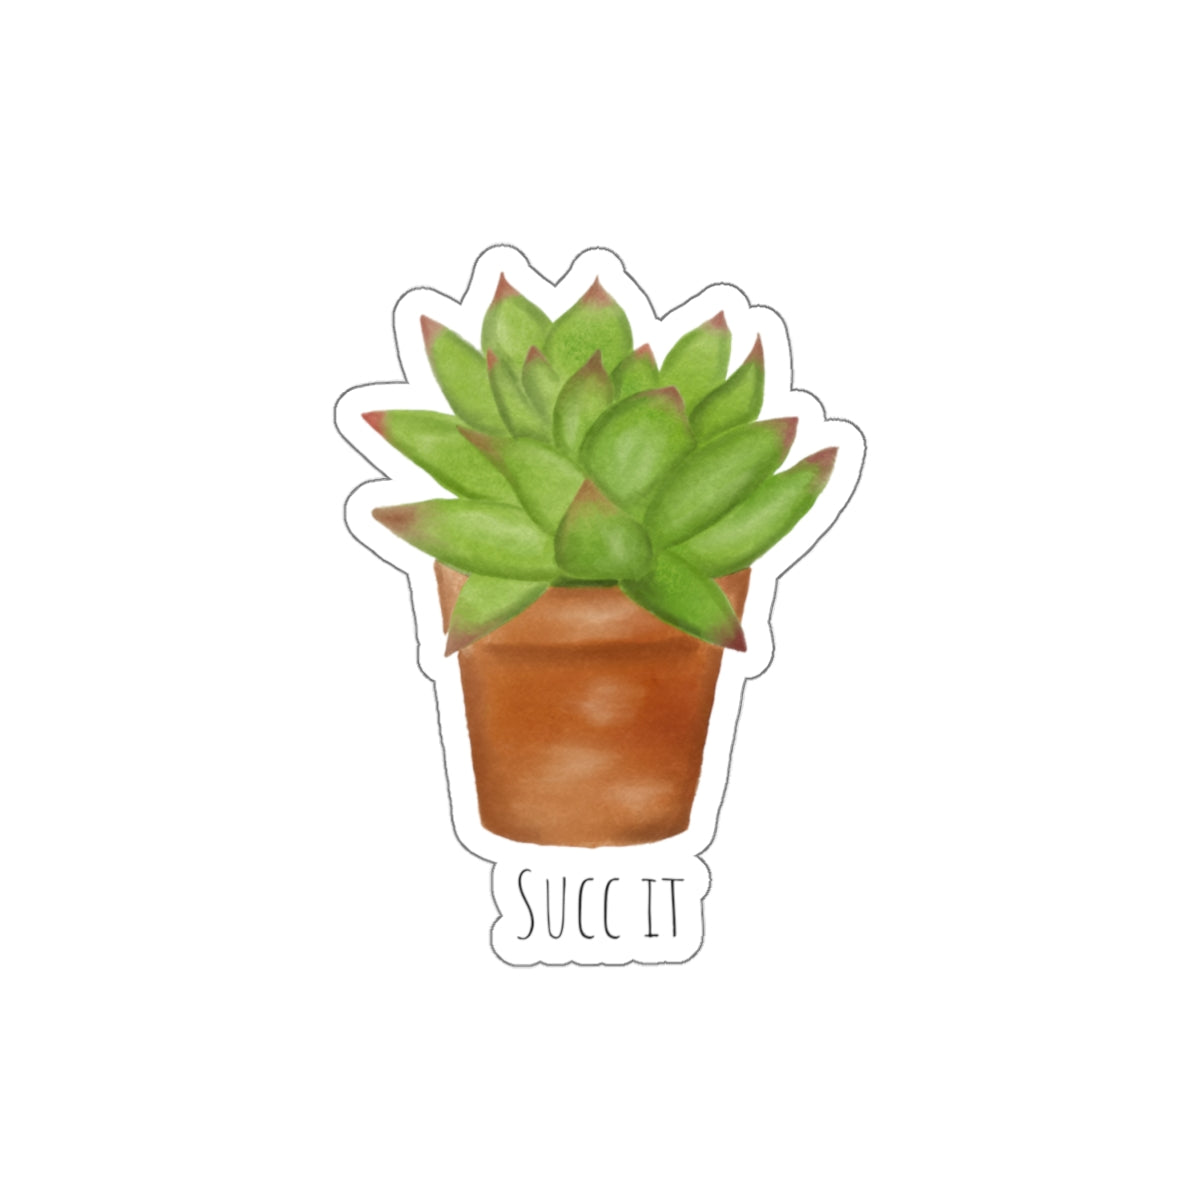 "Succ It" Succulent Sticker